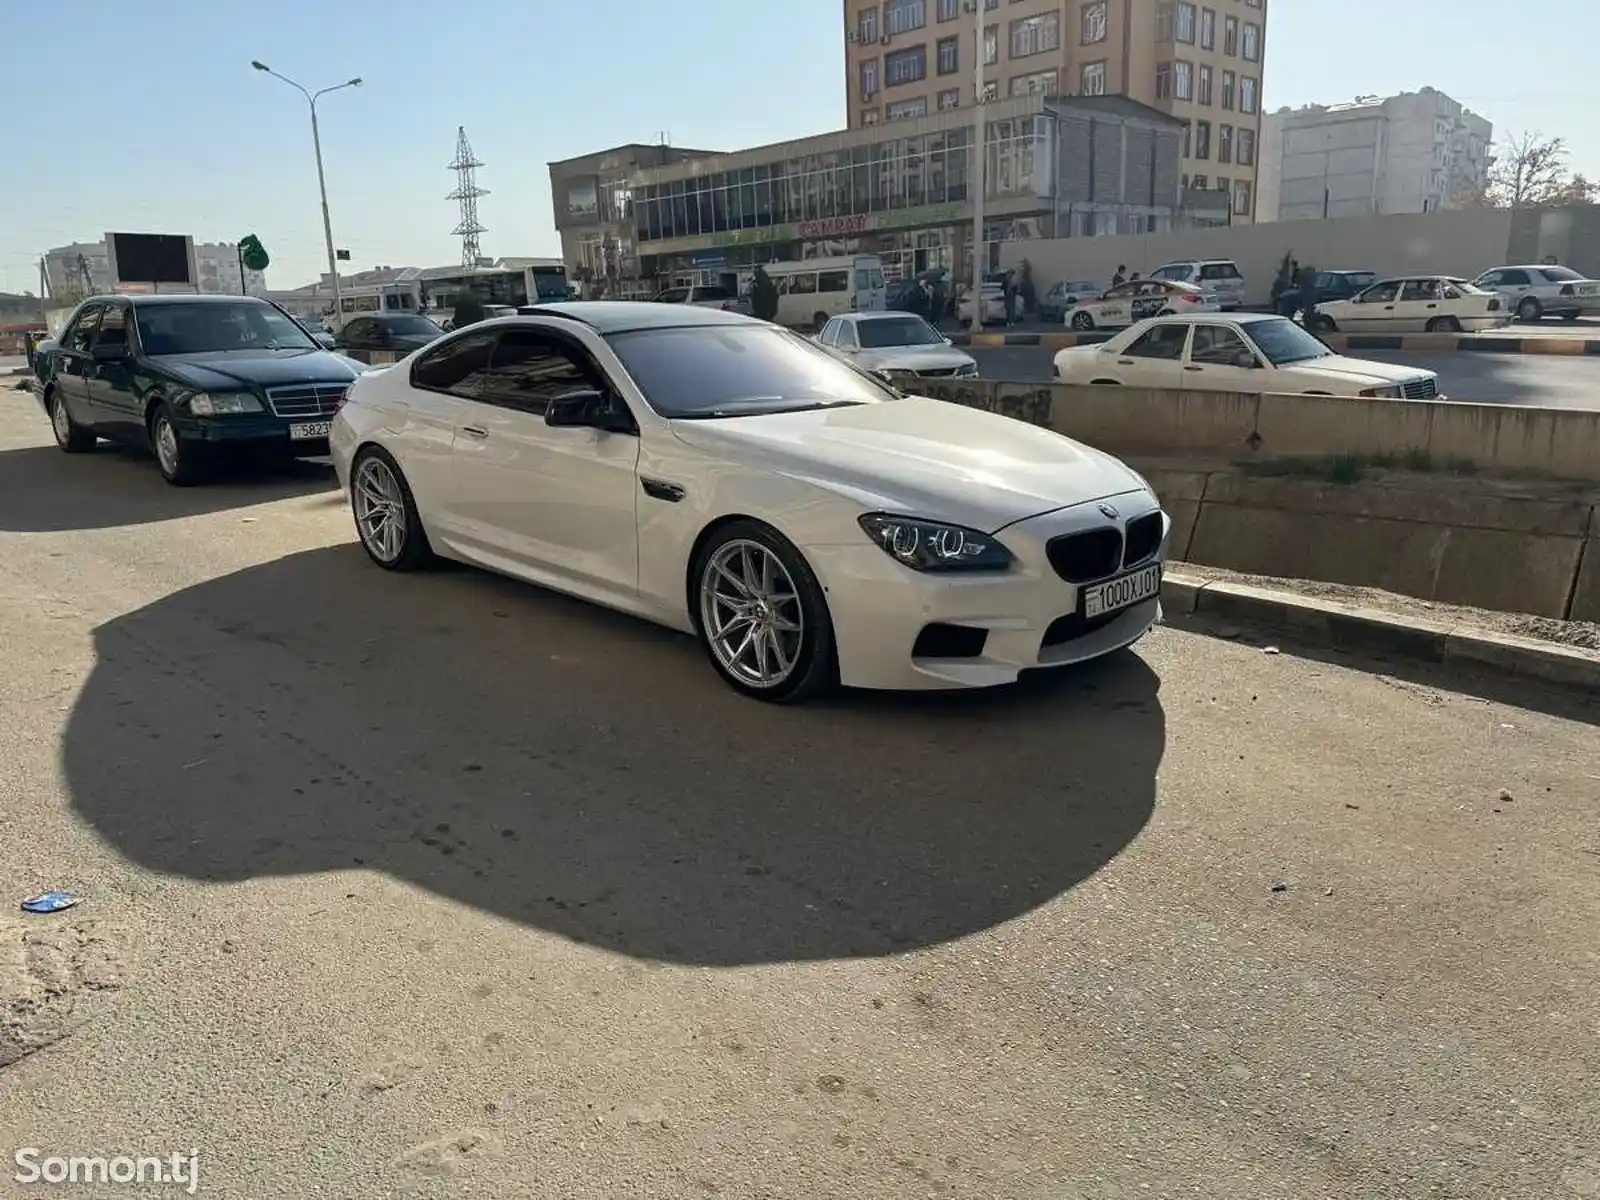 BMW 6 series, 2012-2